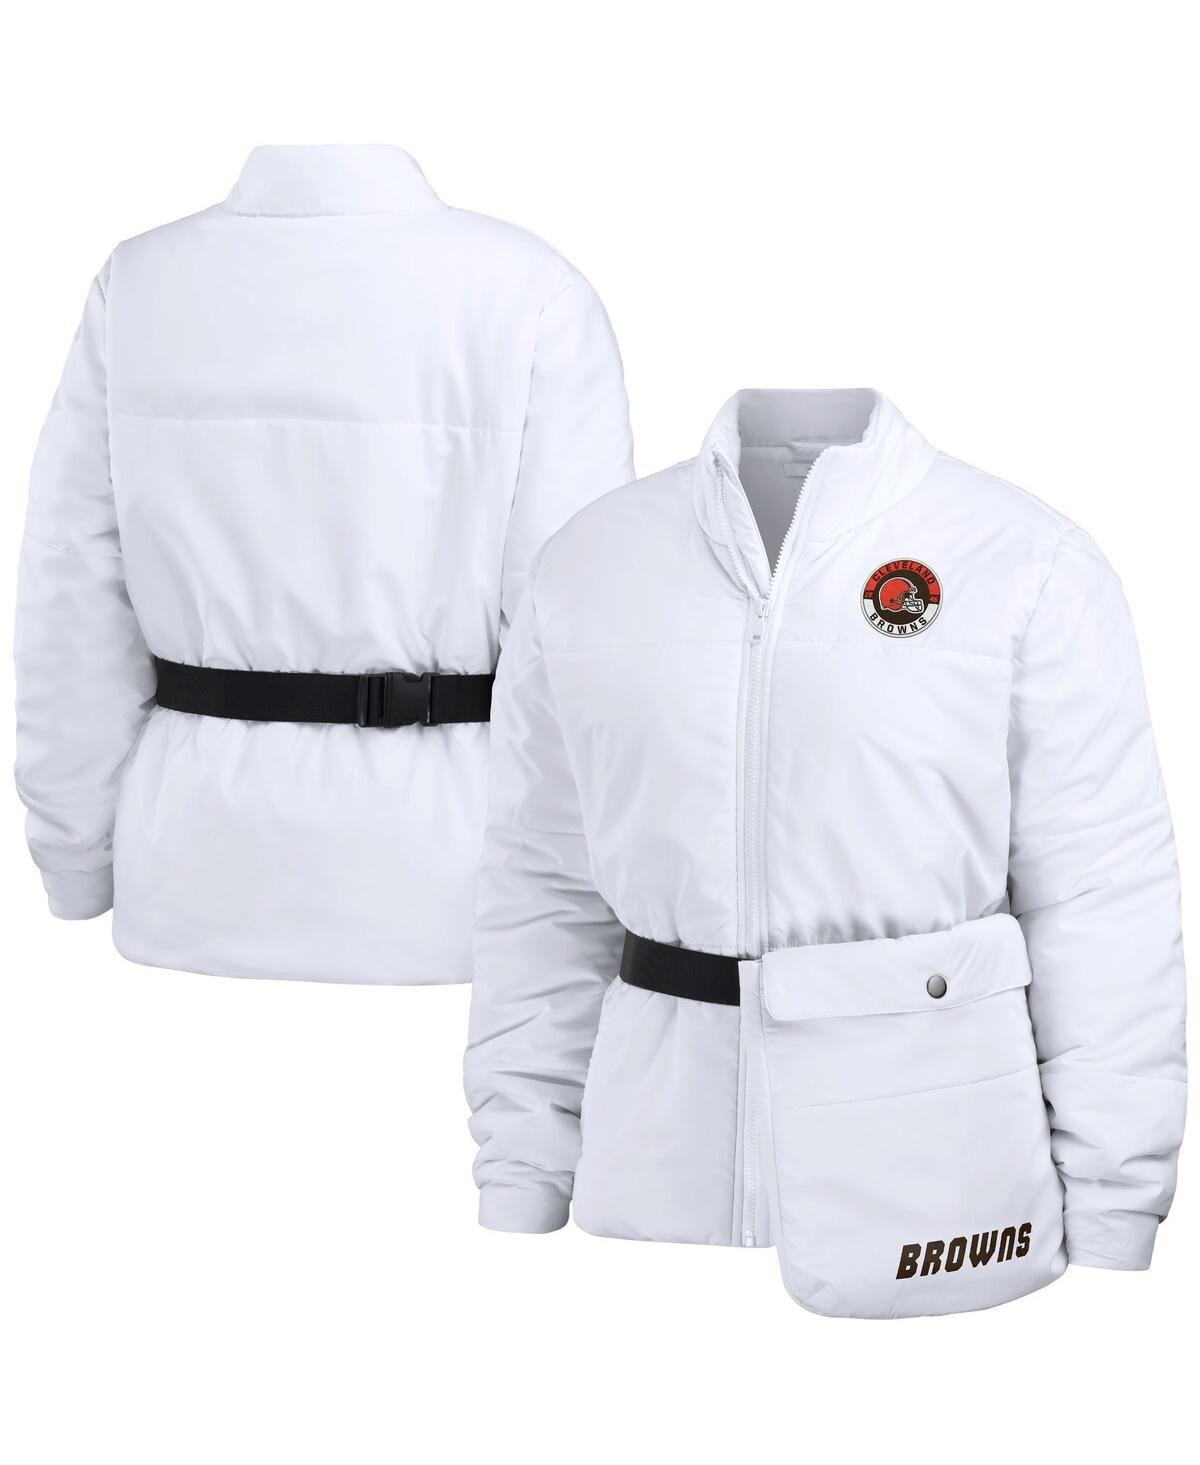 Wear By Erin Andrews Women's  White Cleveland Browns Packaway Full-zip Puffer Jacket